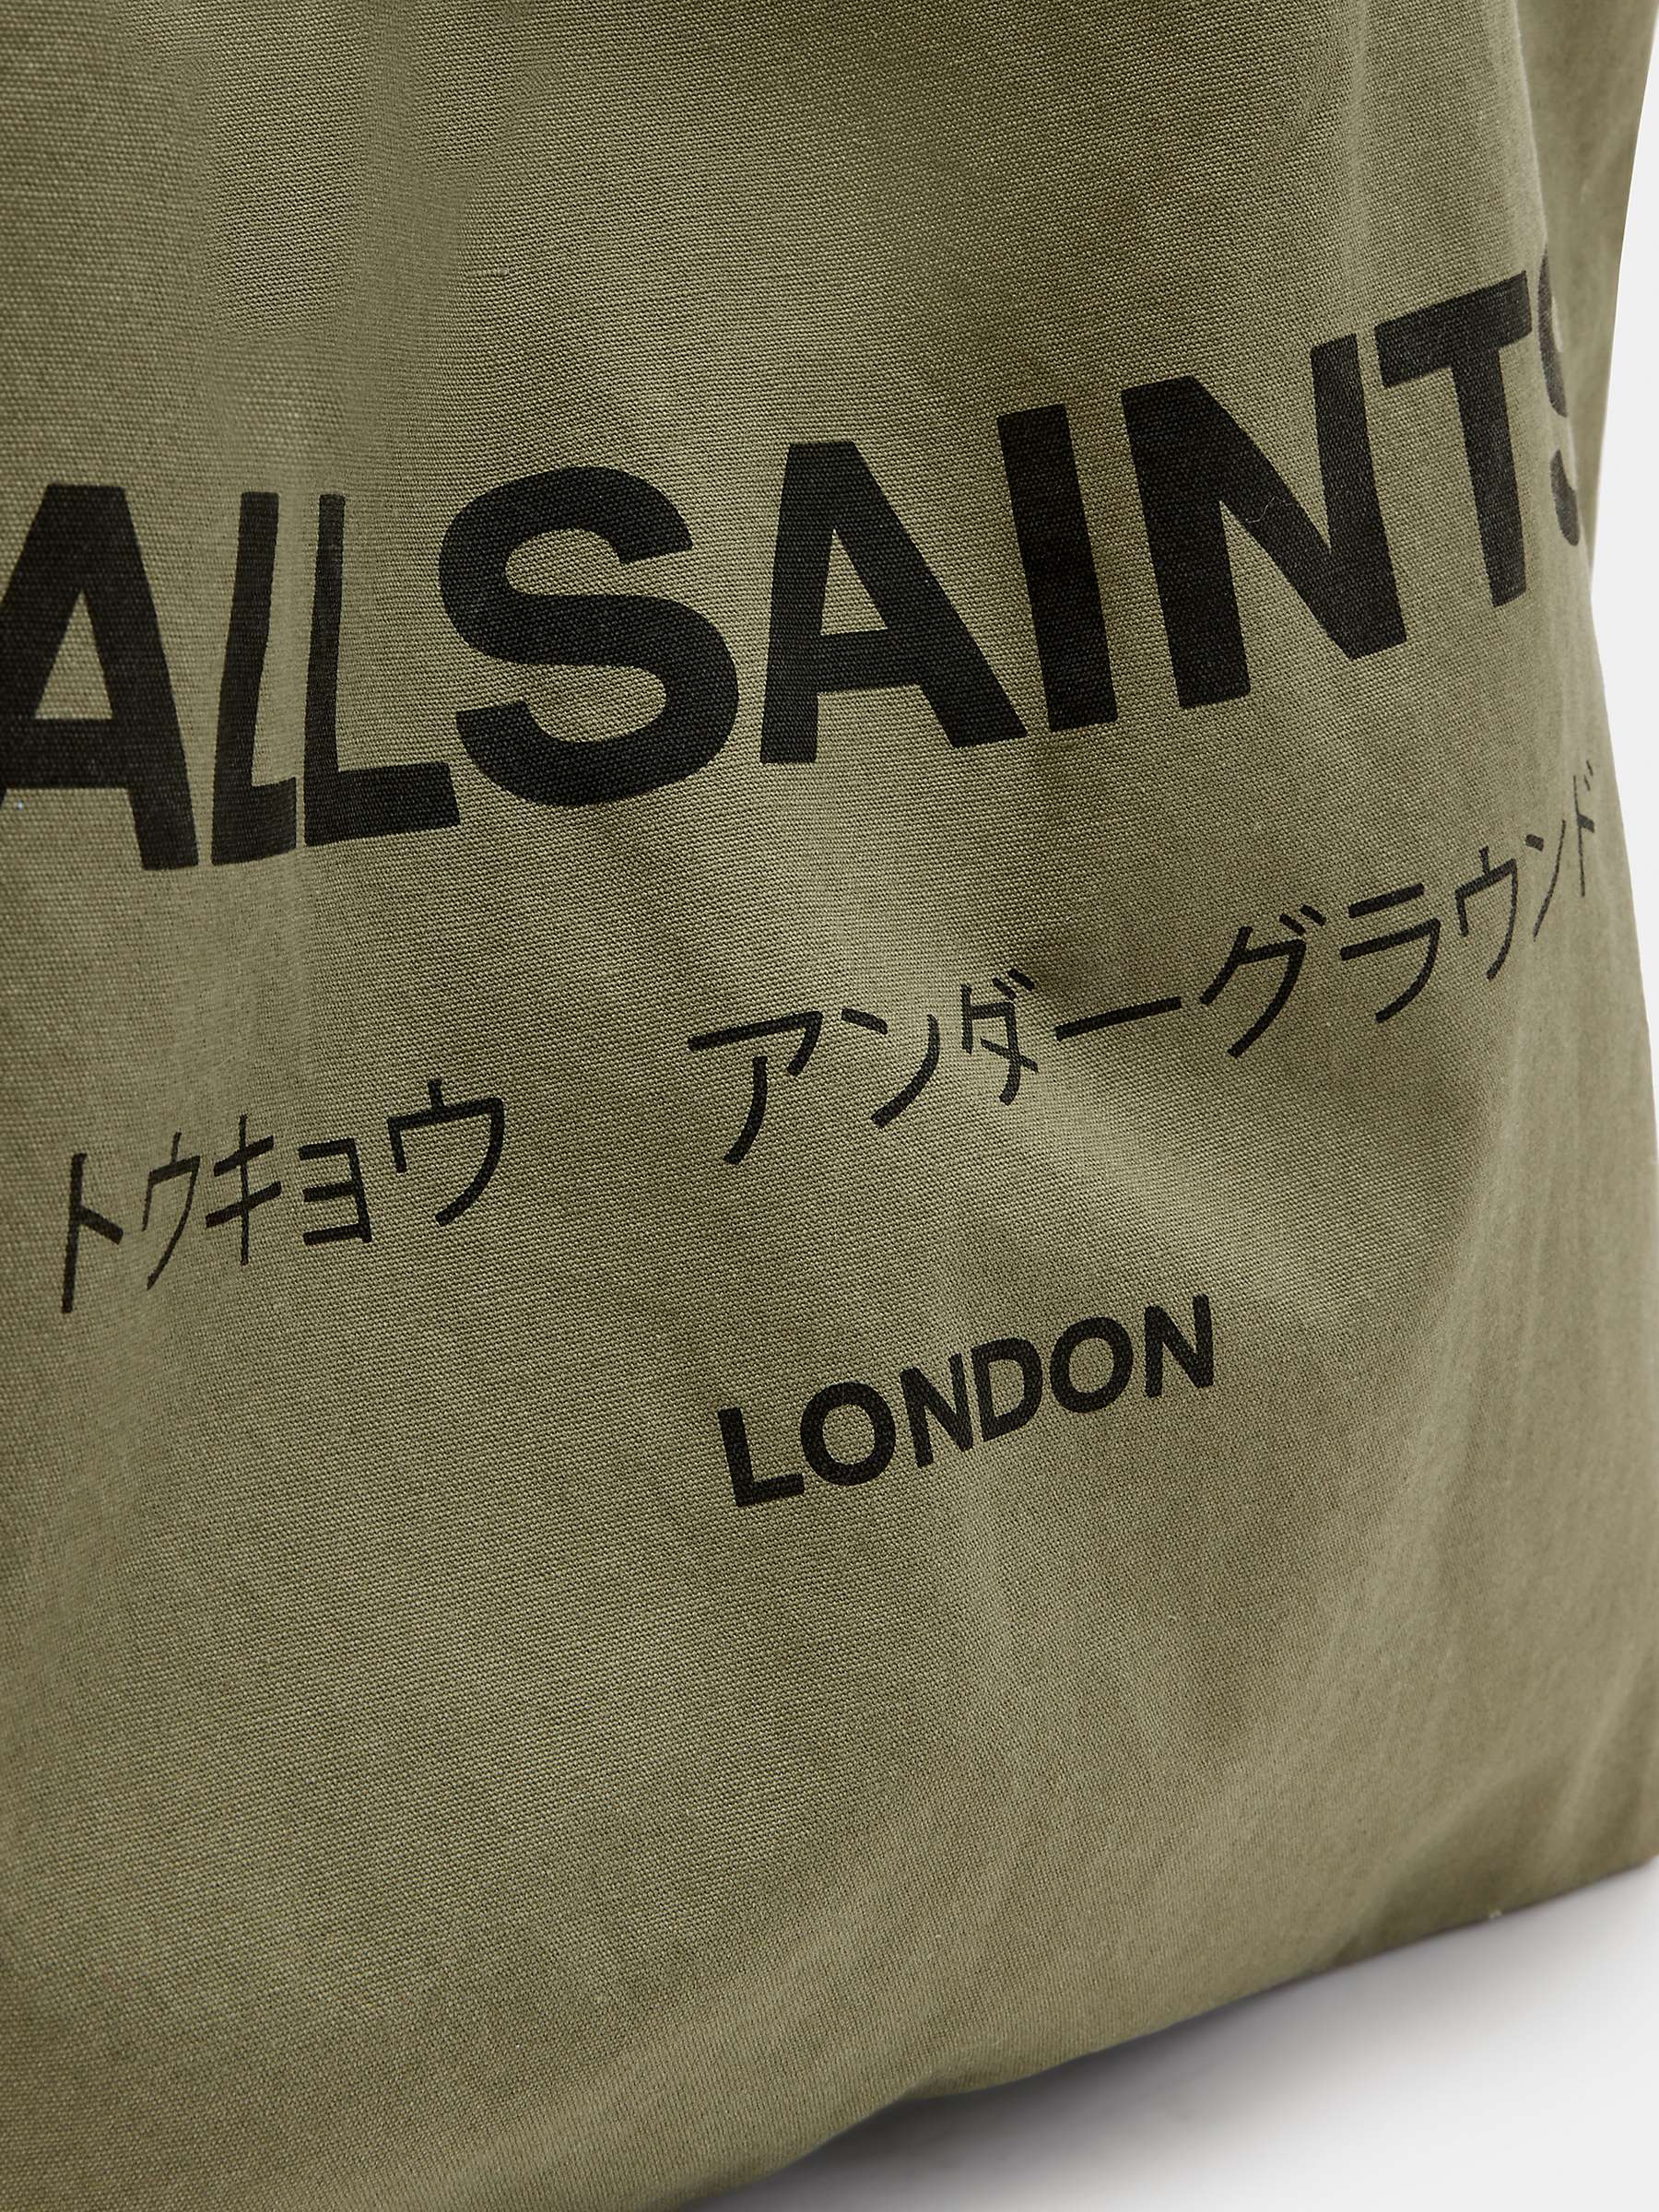 Buy AllSaints Underground Tote Bag Online at johnlewis.com